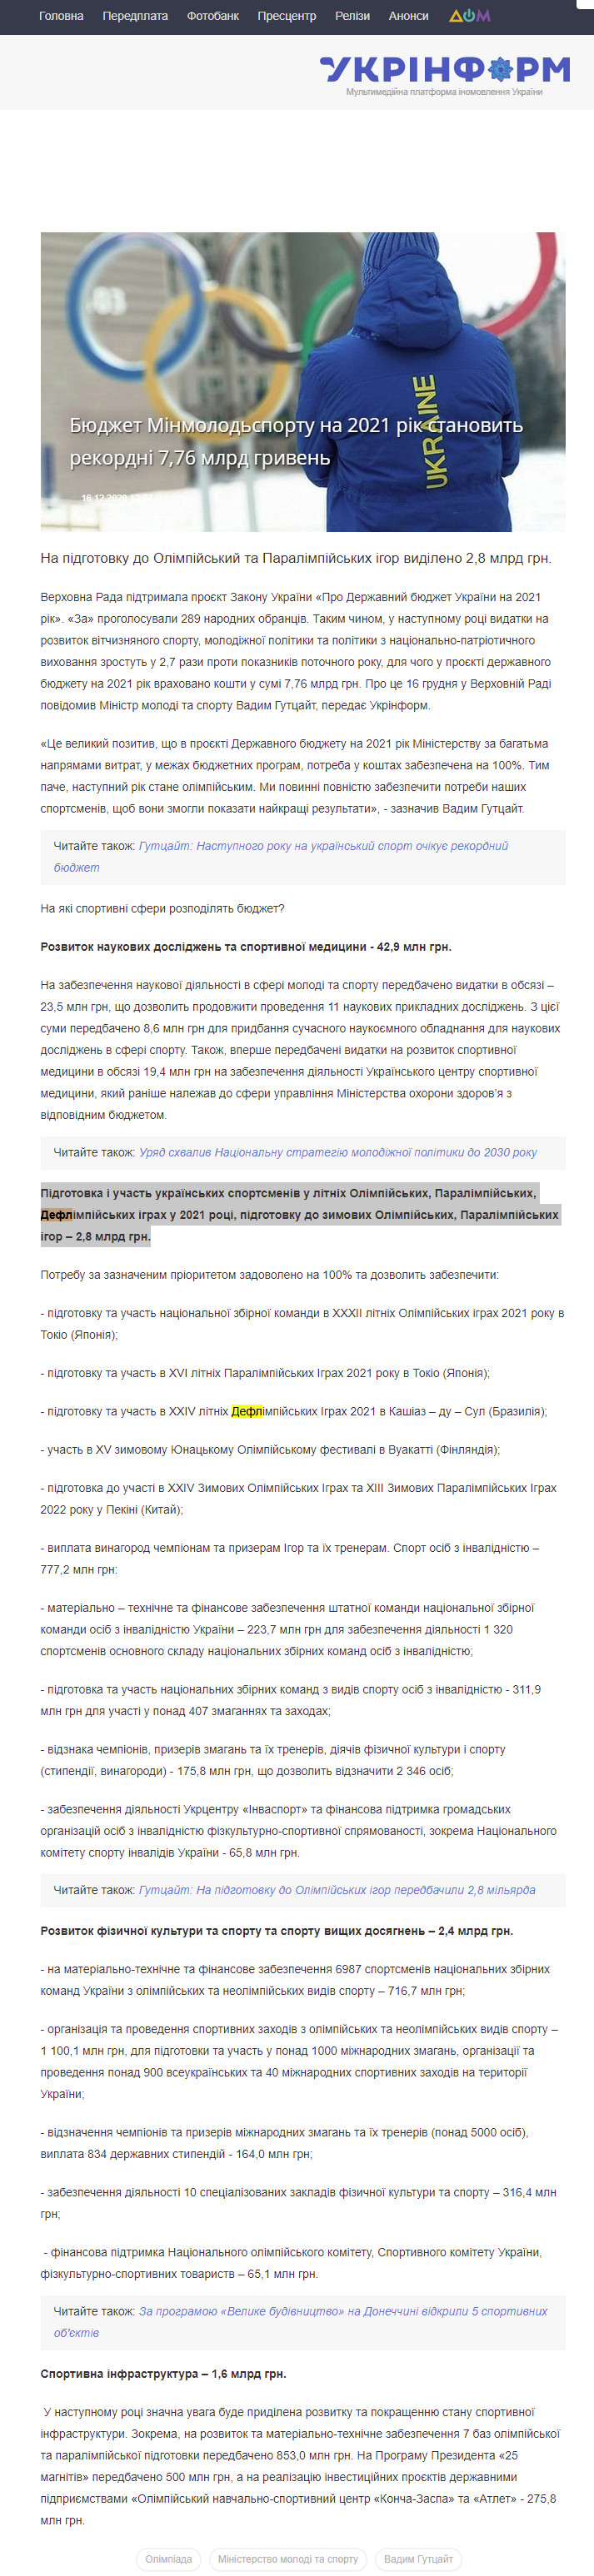 https://www.ukrinform.ua/rubric-sports/3155632-budzet-minmolodsportu-na-2021-rik-stanovit-rekordni-776-mlrd-griven.html